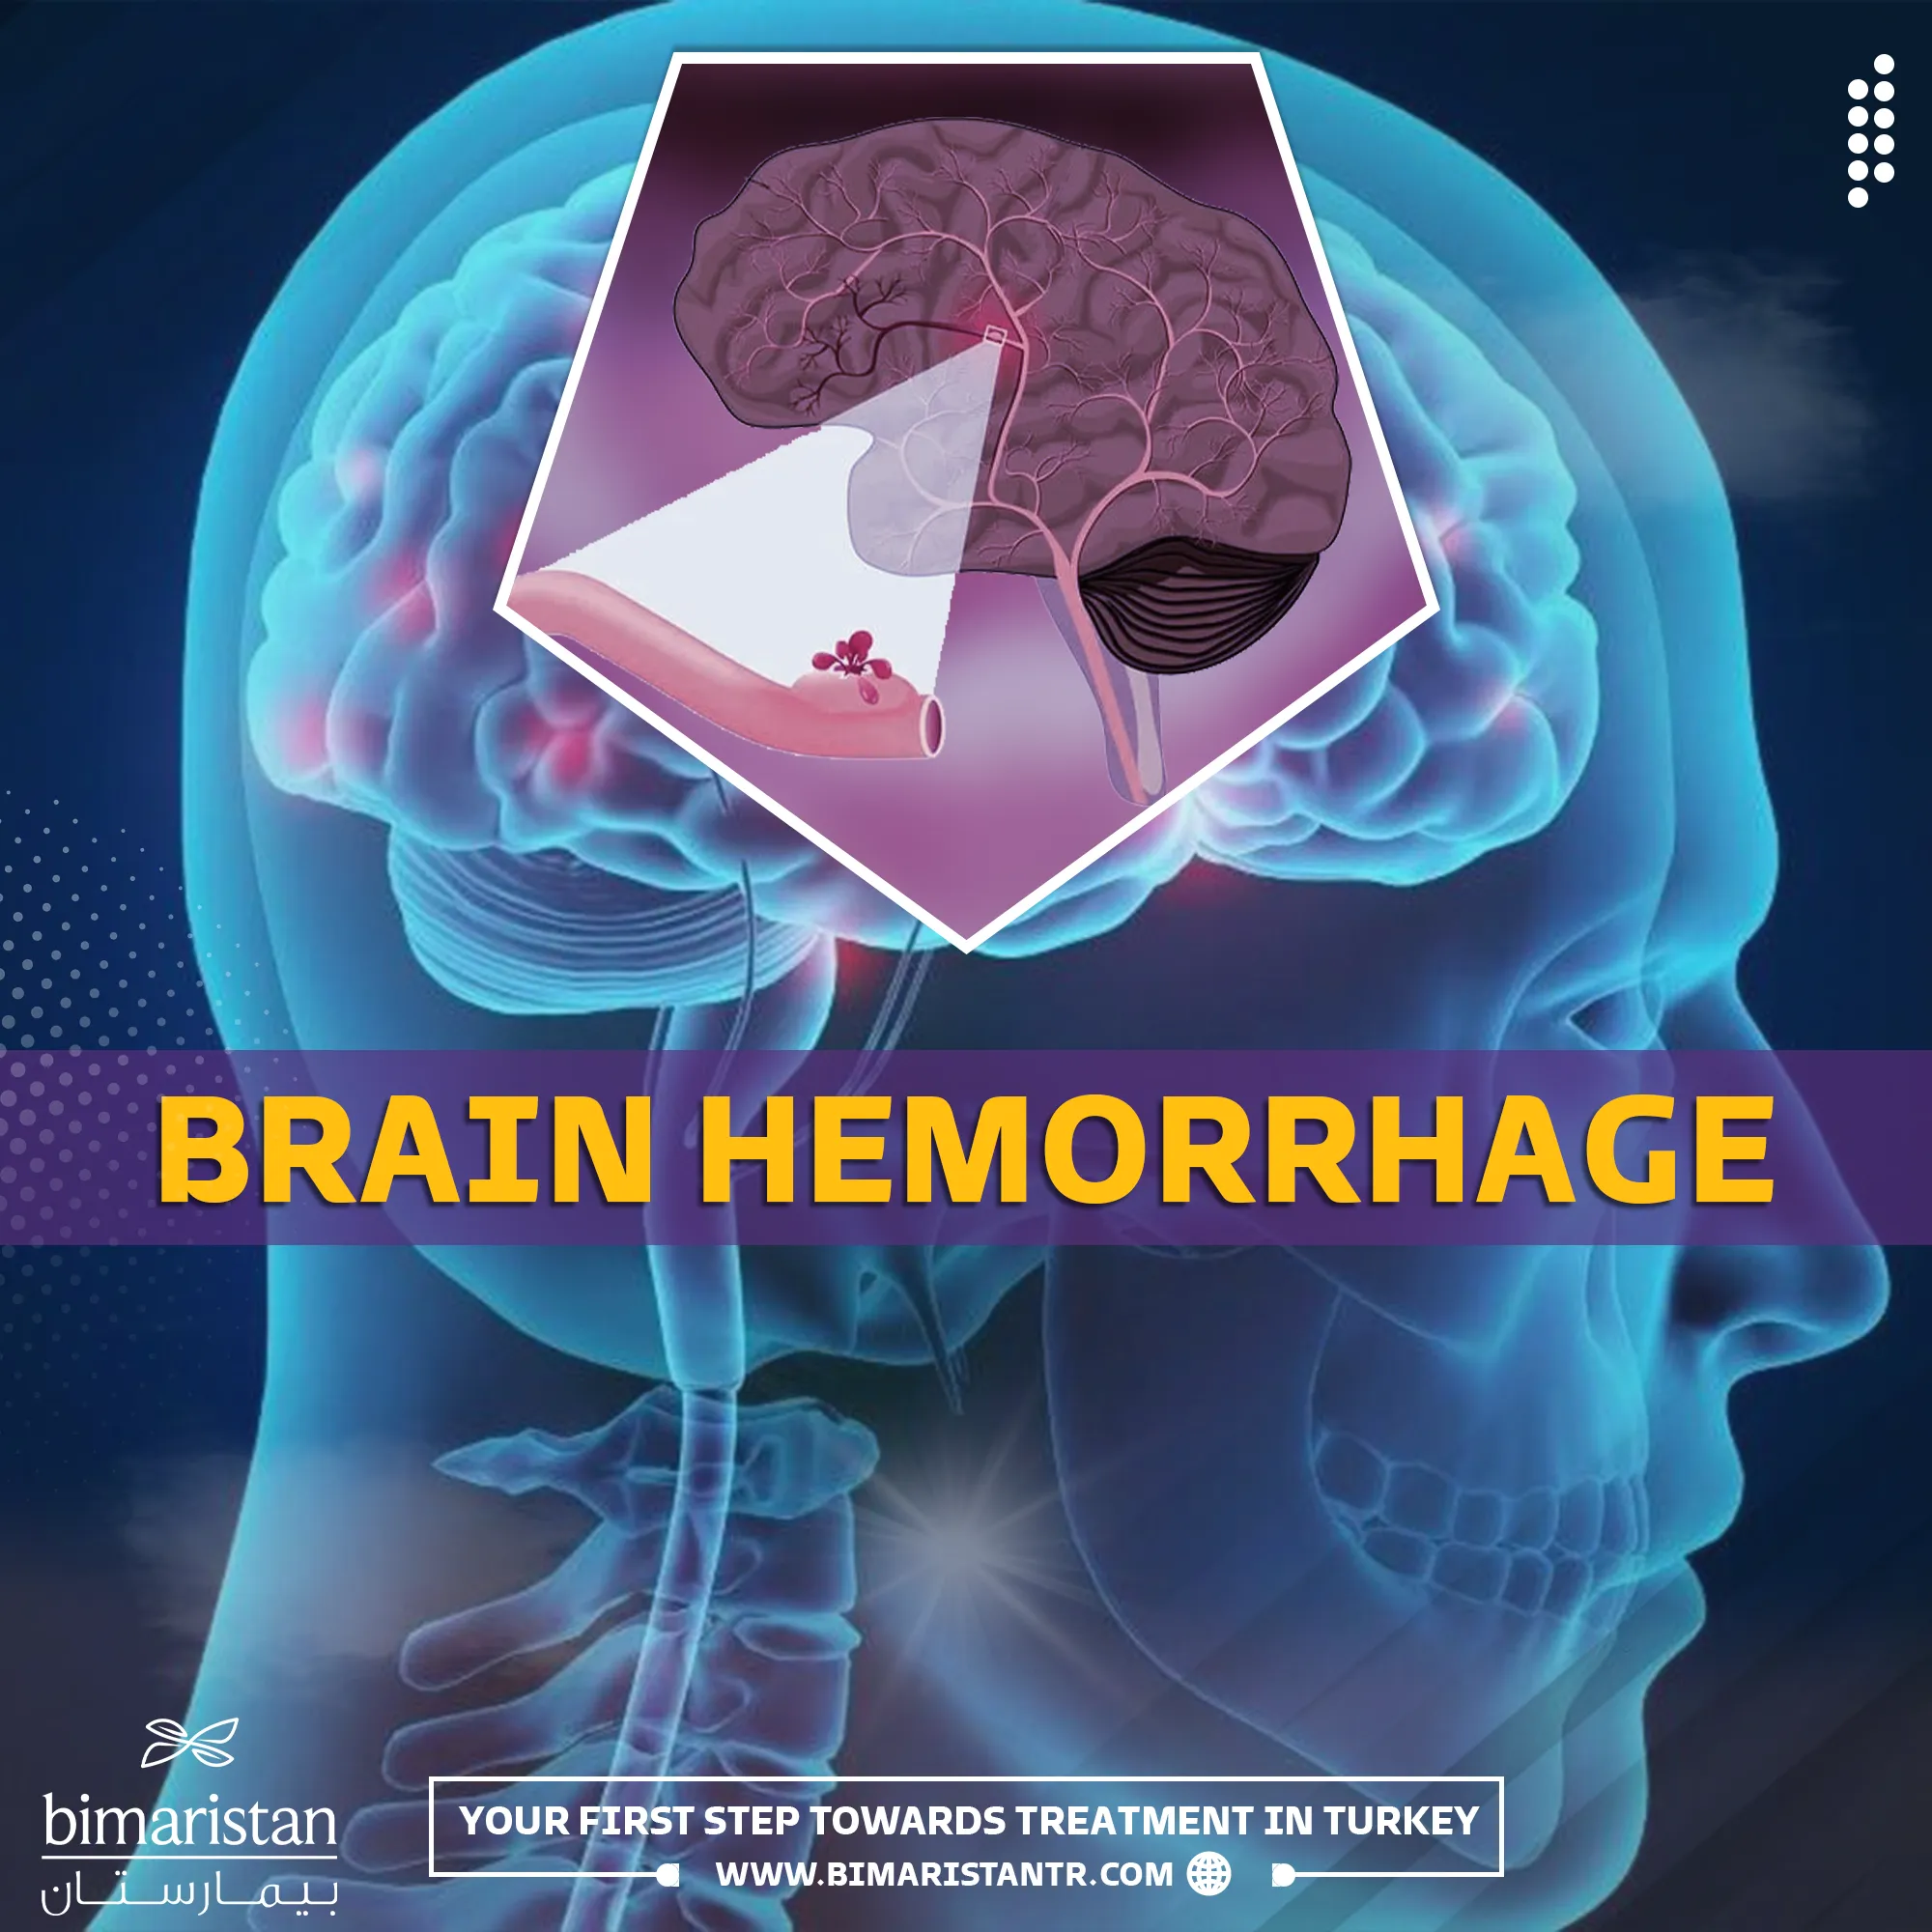 Brain hemorrhage in the elderly